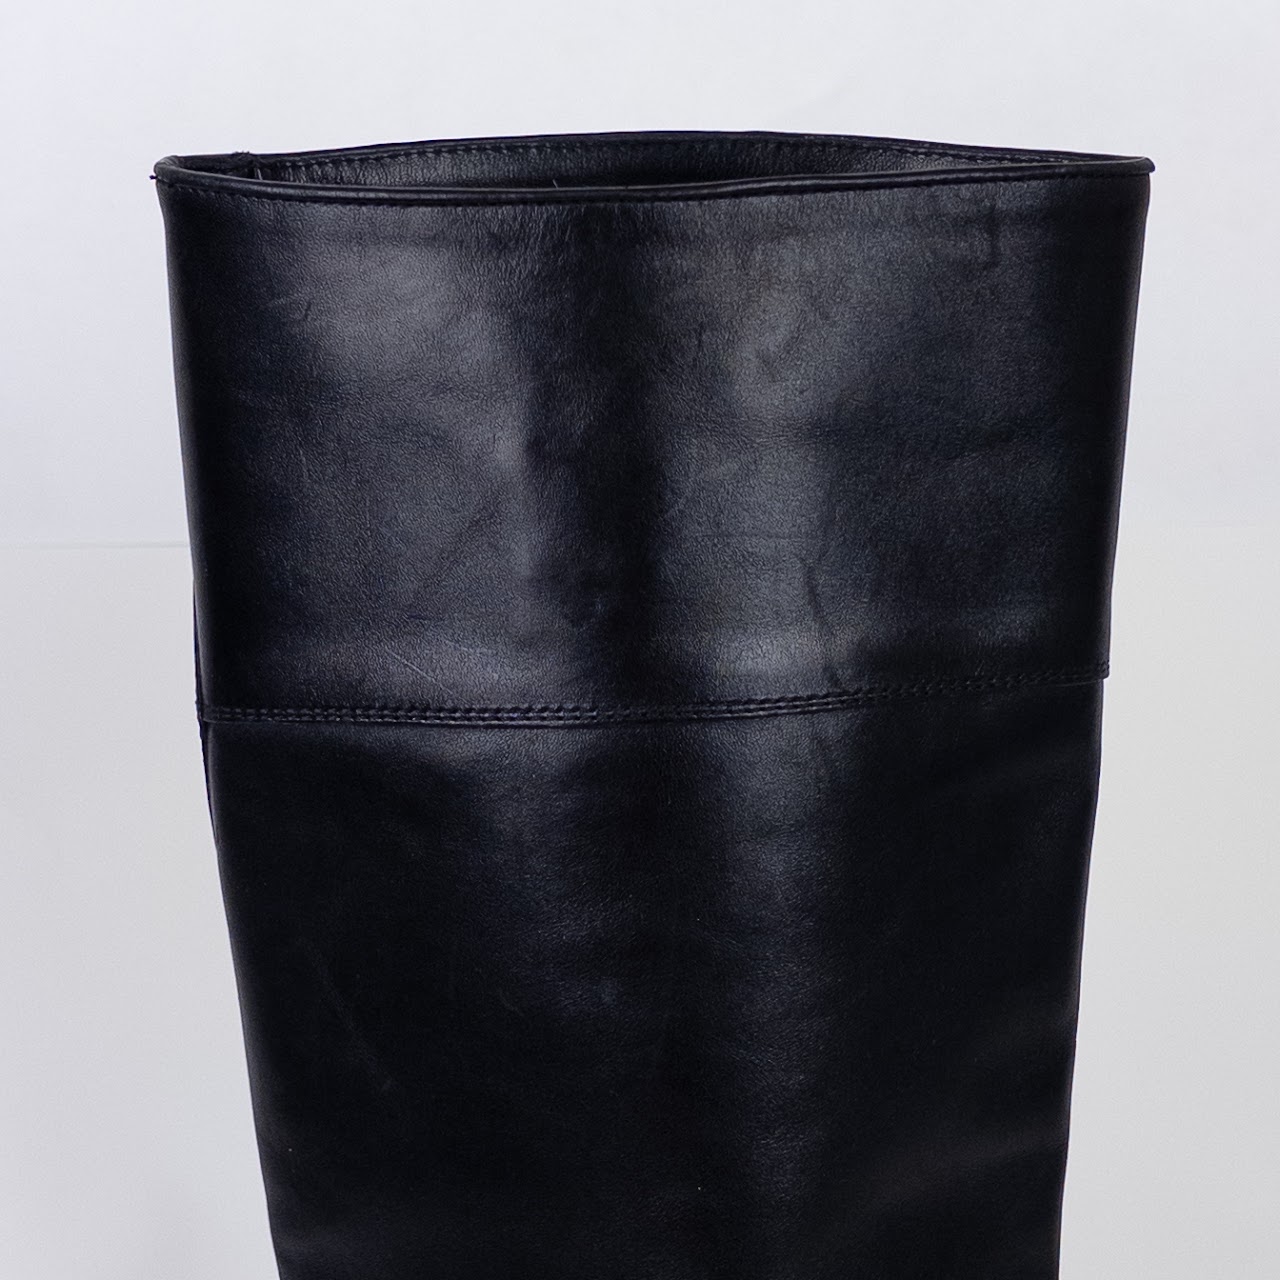 Prada Leather Calf High Boots